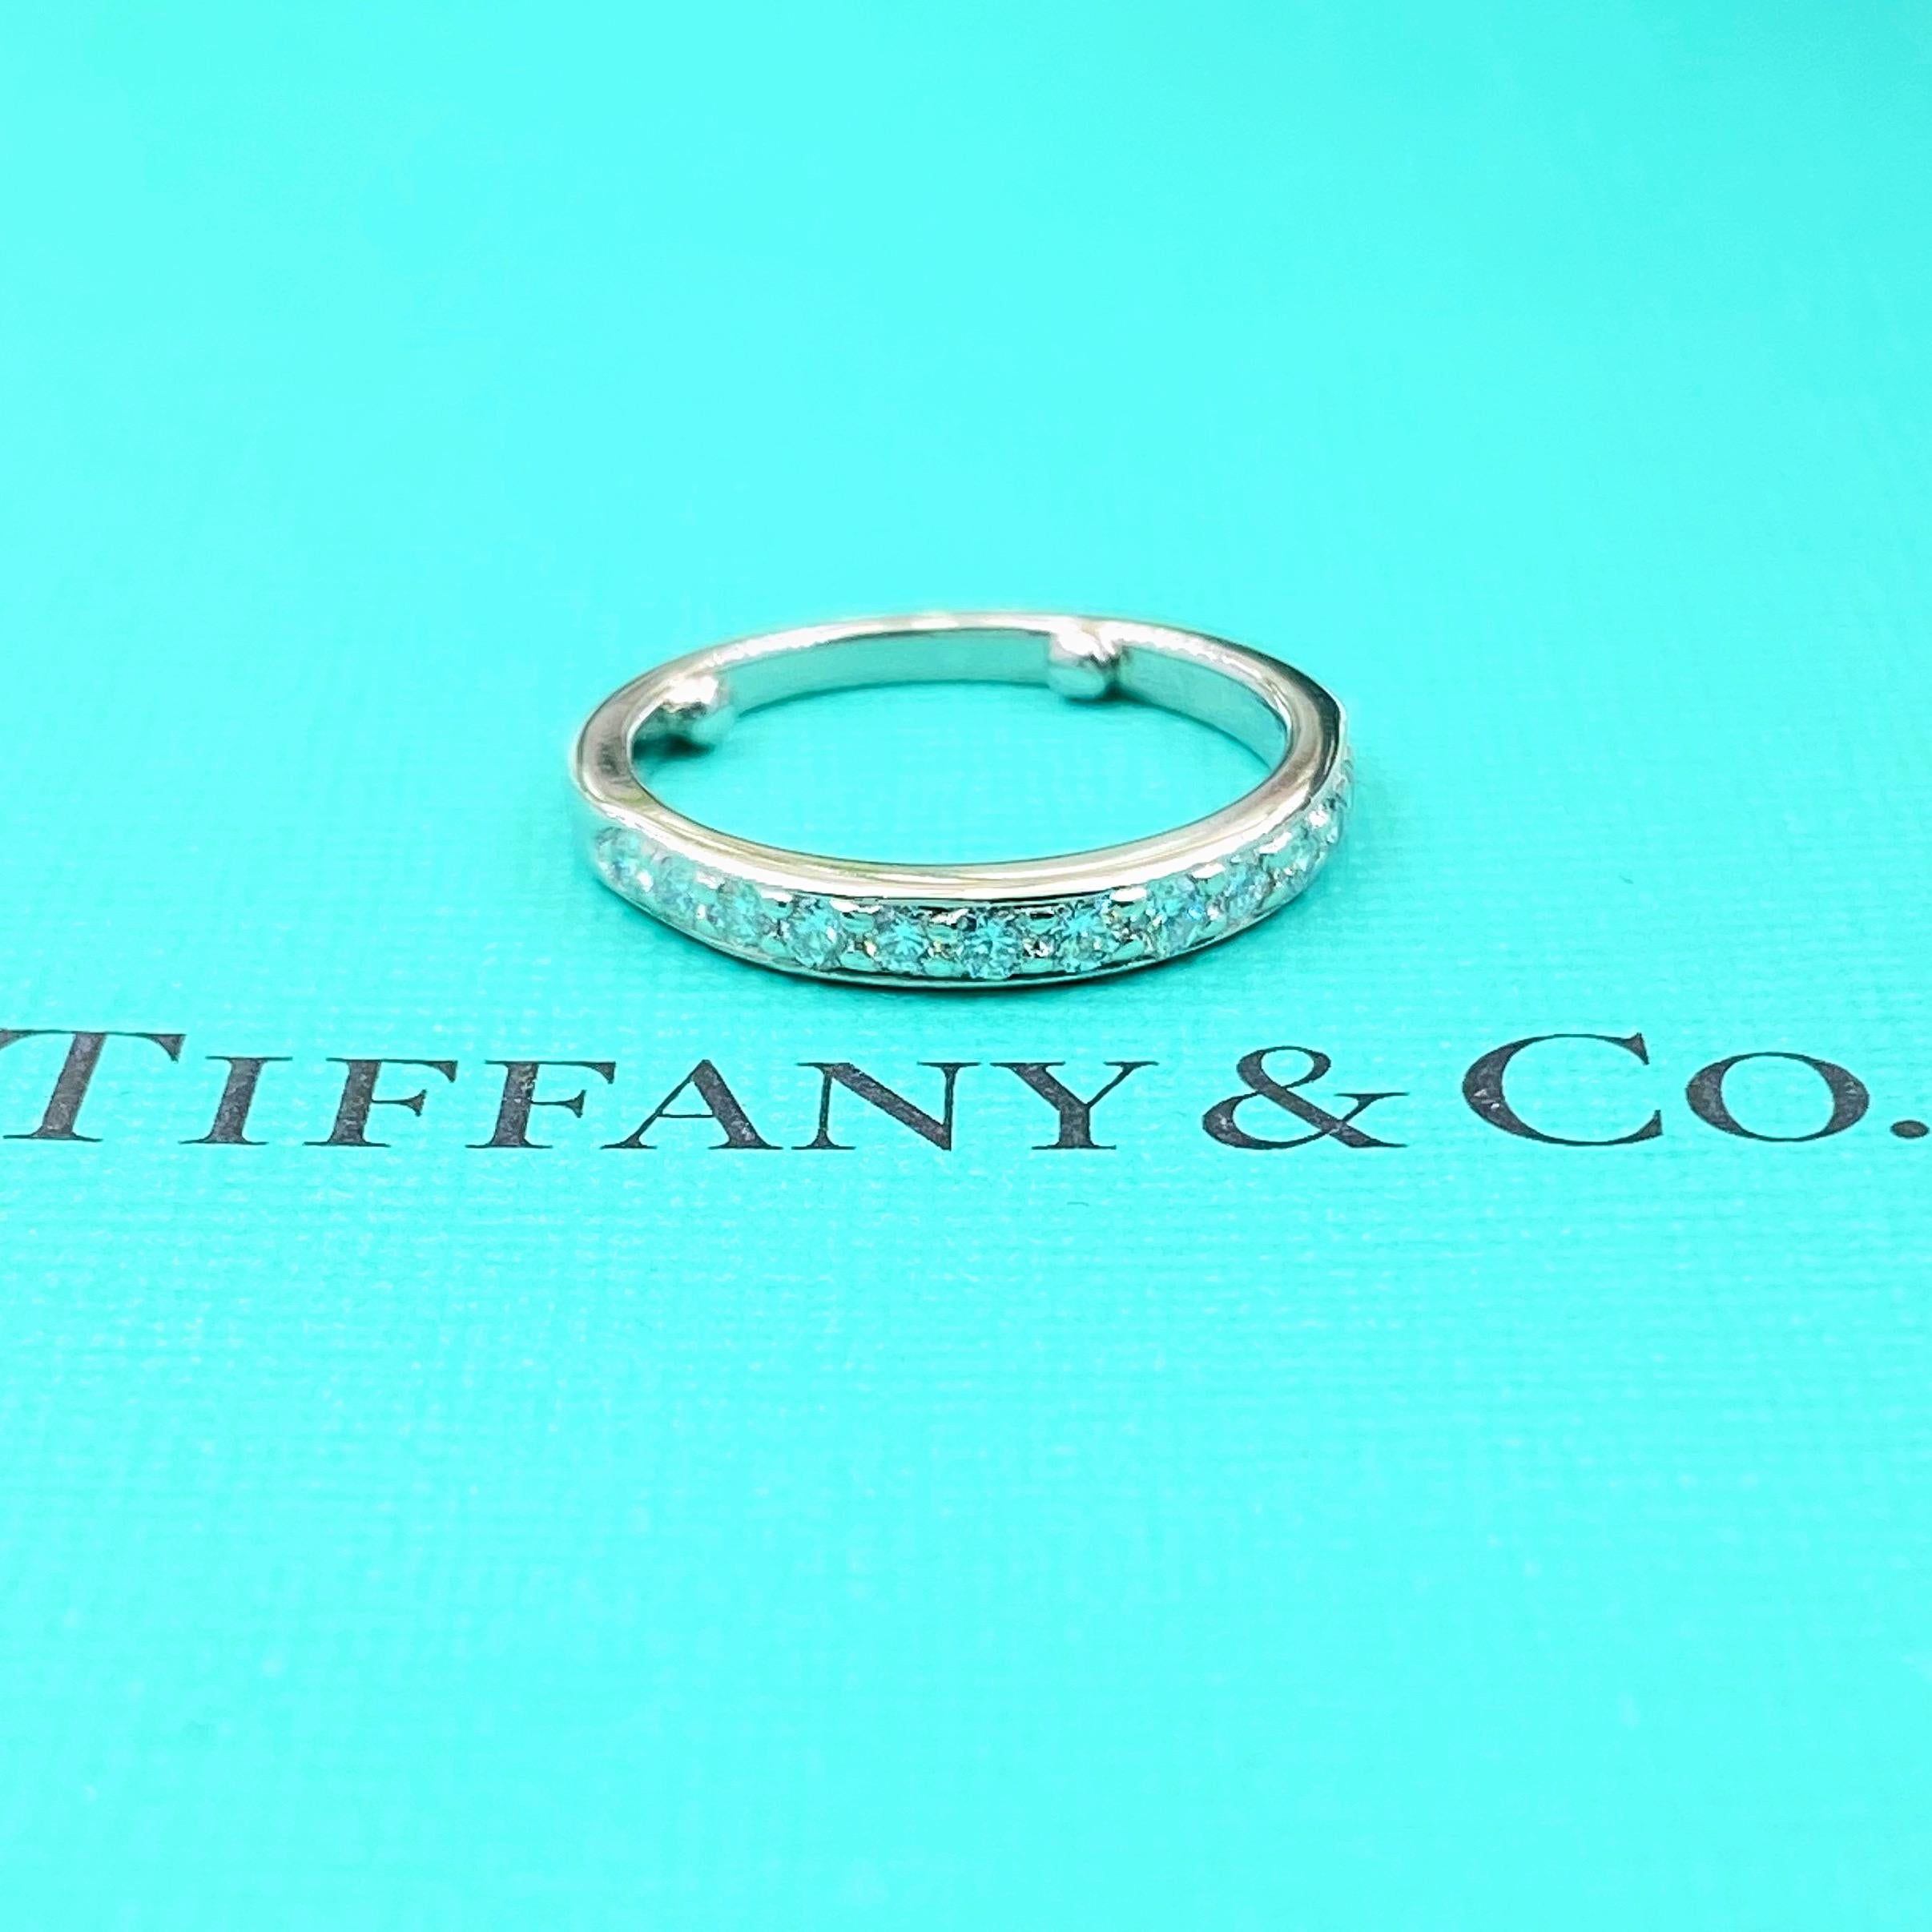 Tiffany & Co. Diamond Wedding Band Ring
Style:  Half-Circle Bead Set 
Metal:  Platinum PT950
Size:  4.5 w/ sizing beads - sizable
Measurements:  2.50 MM
TCW:  0.27 tcw
Main Diamond:  13 Round Brilliant Diamonds
Color & Clarity:  F - G /